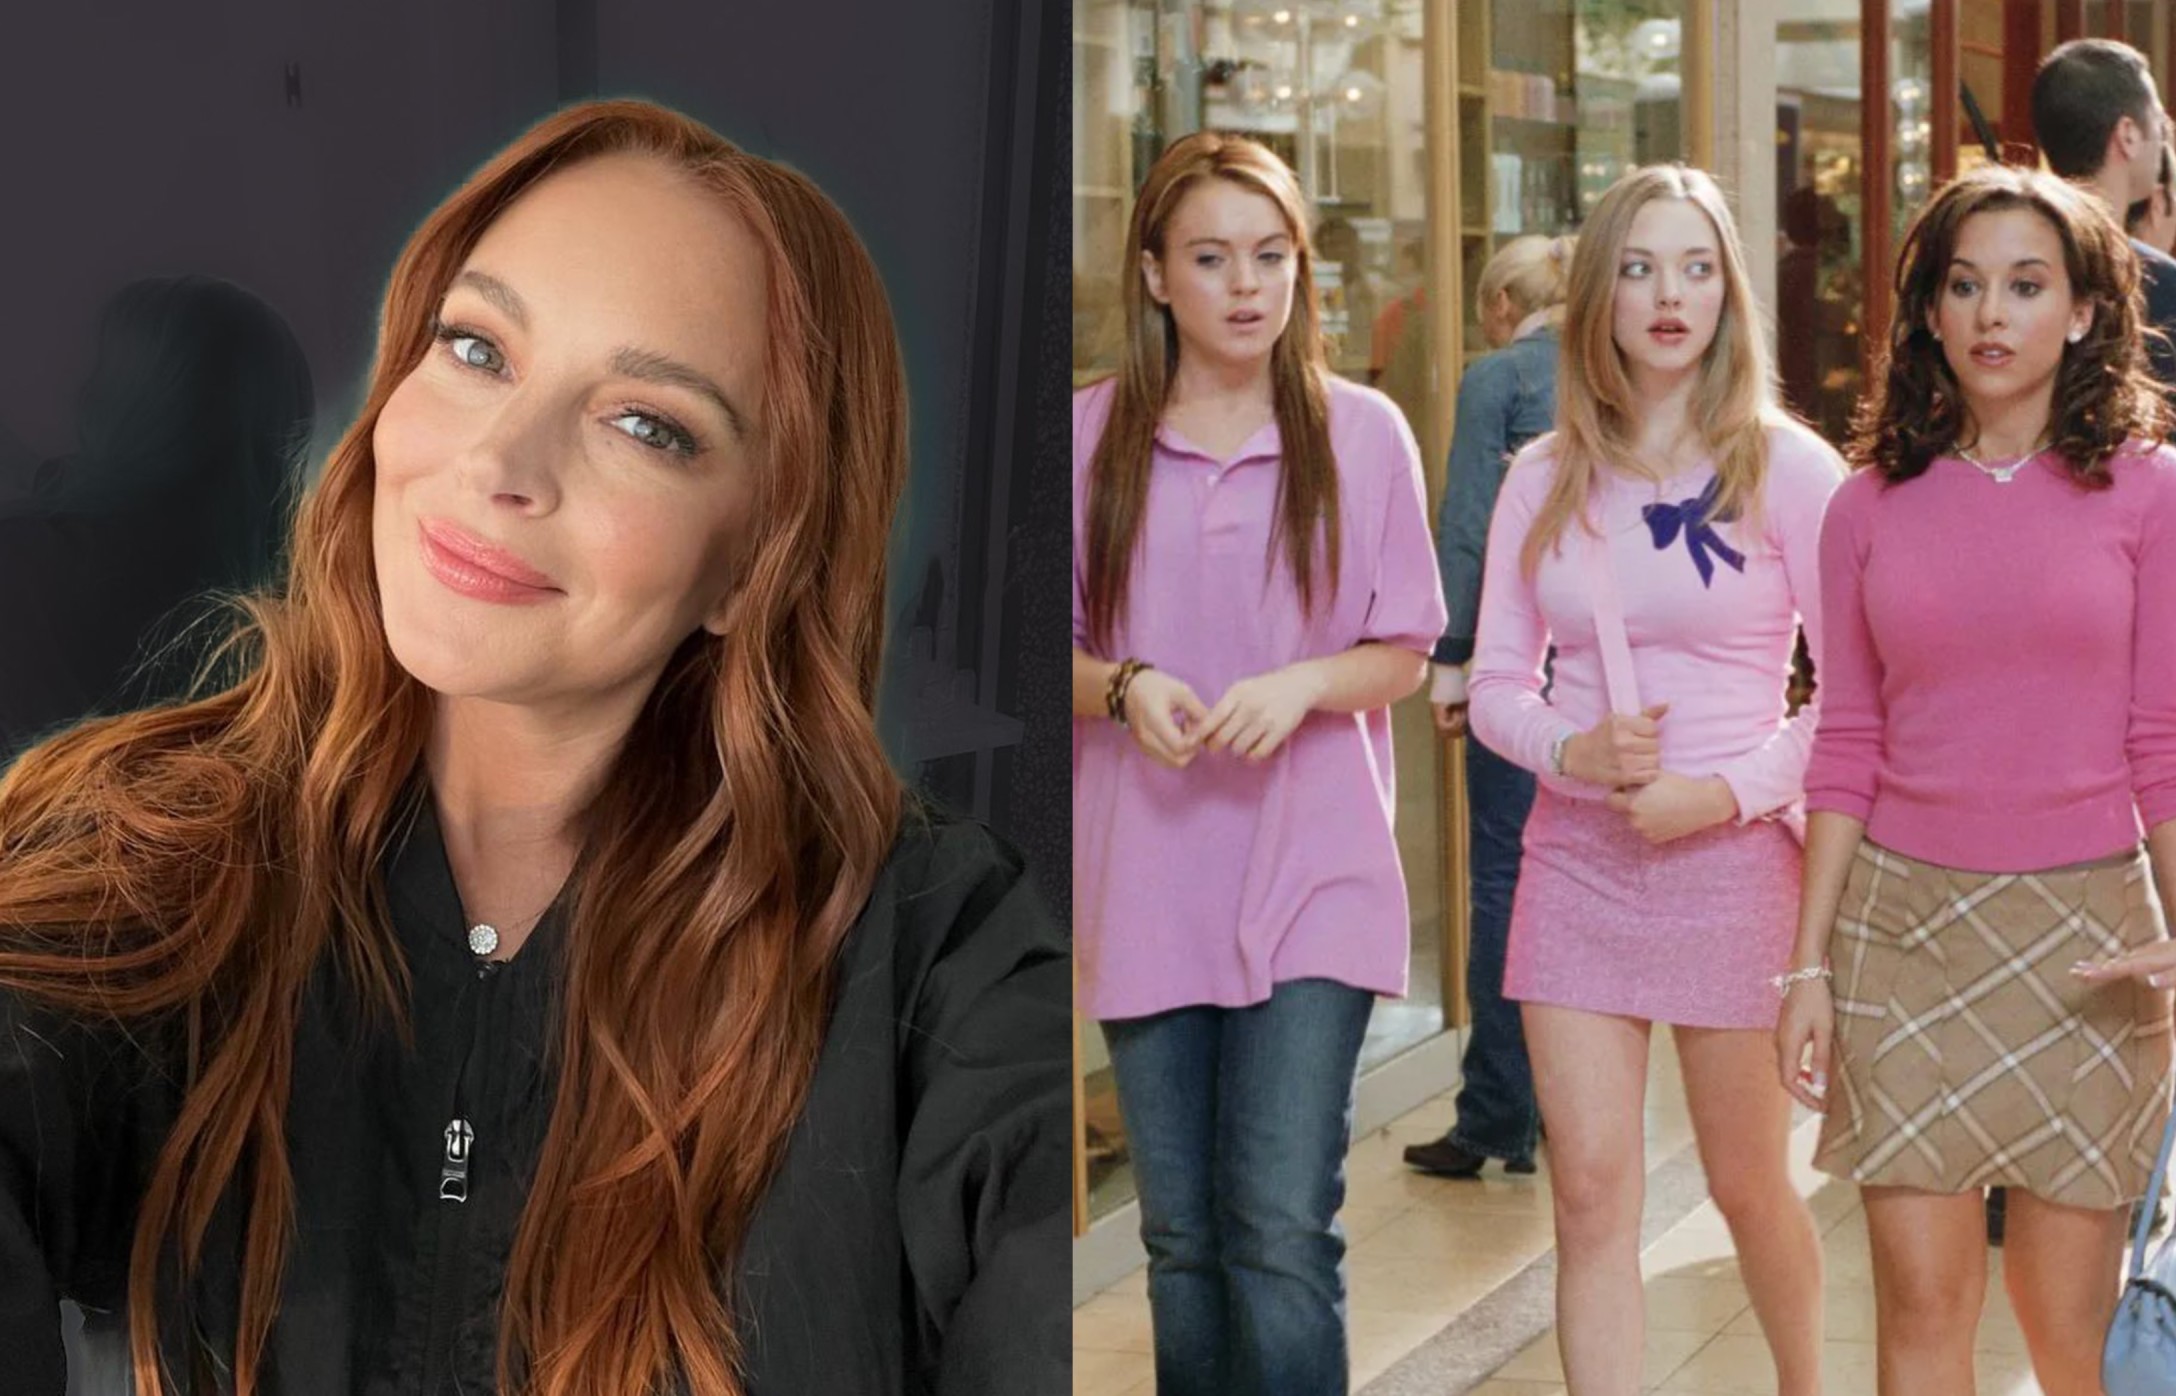 Mean Girls' Stars Lindsay Lohan, Amanda Seyfried & Lacey Chabert Film  Secret Project